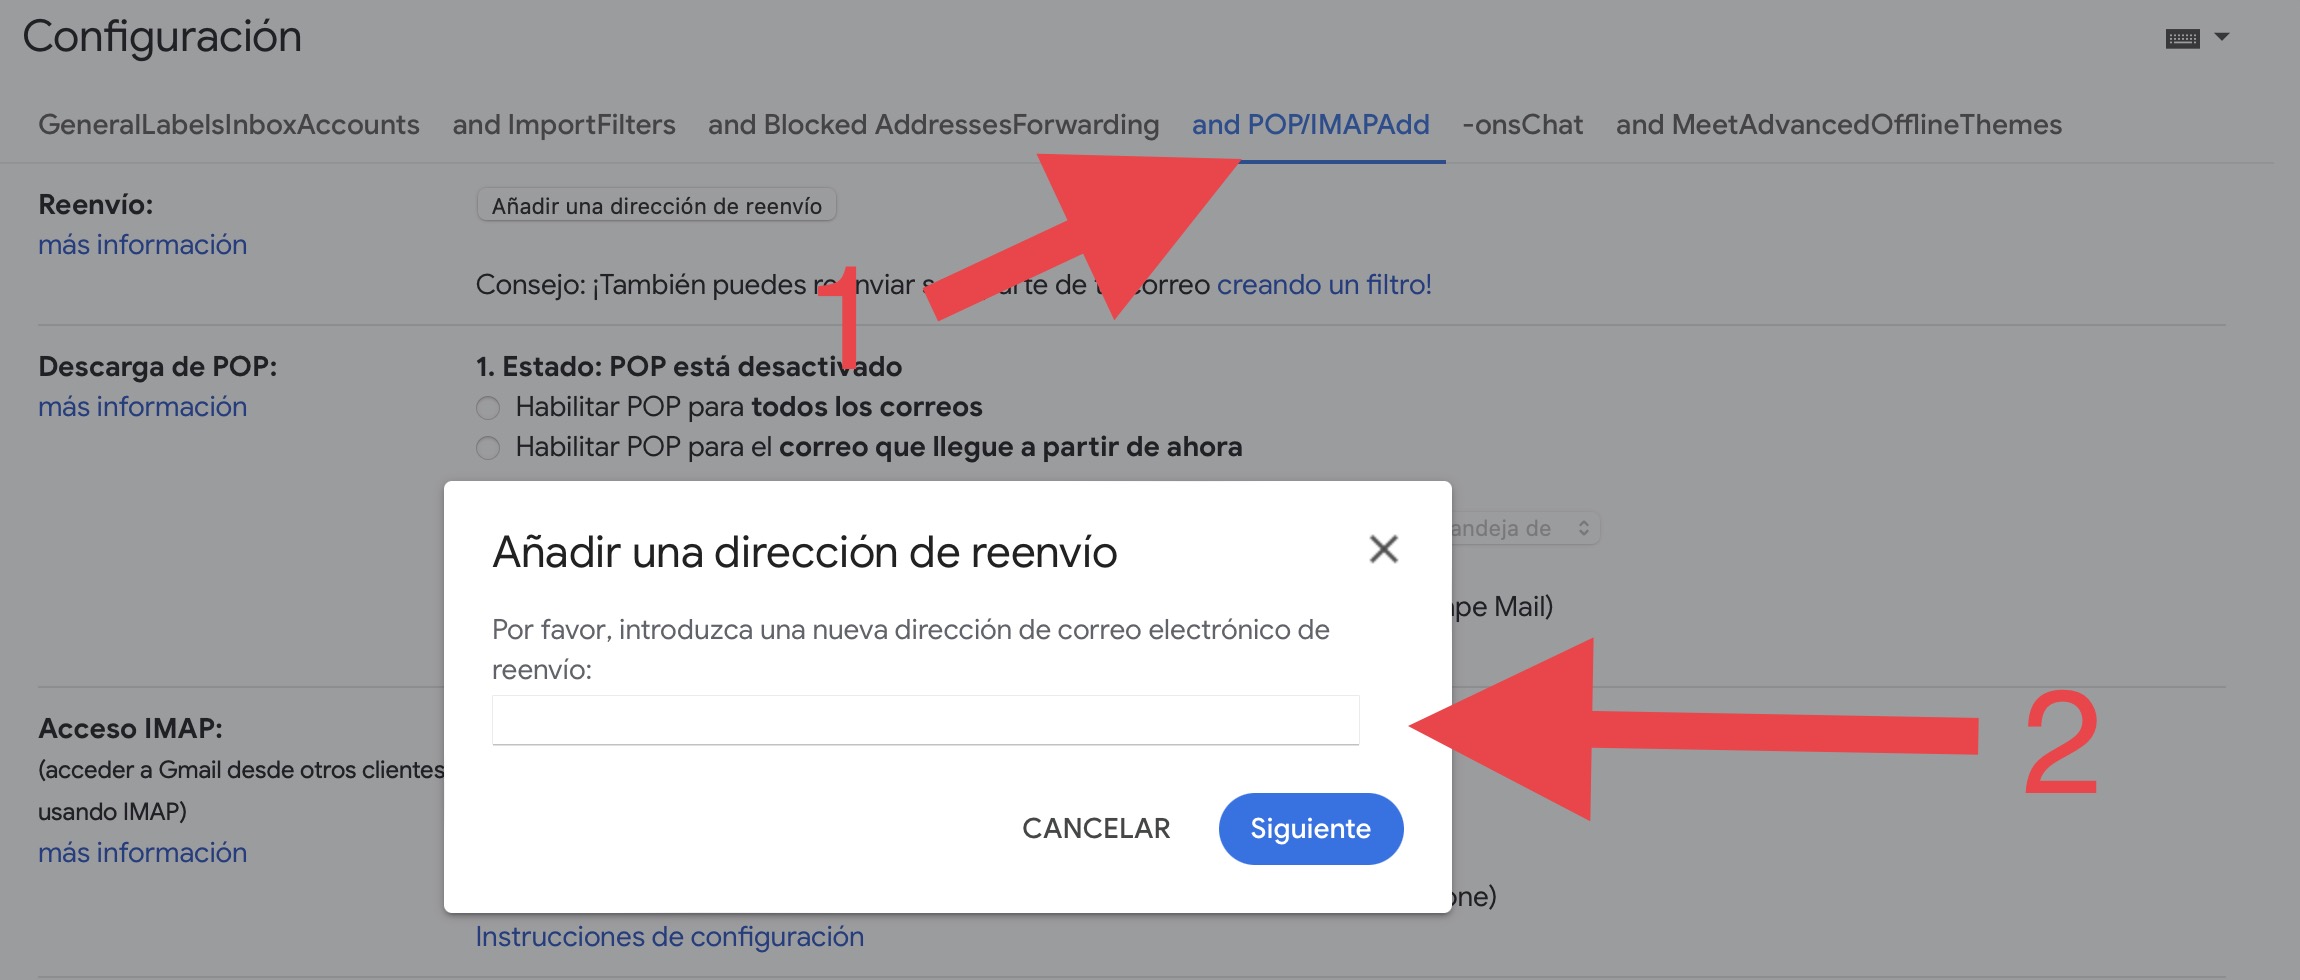 Activar reenvío automático en Gmail. (foto: Gmail/Composición/Jose Arana)